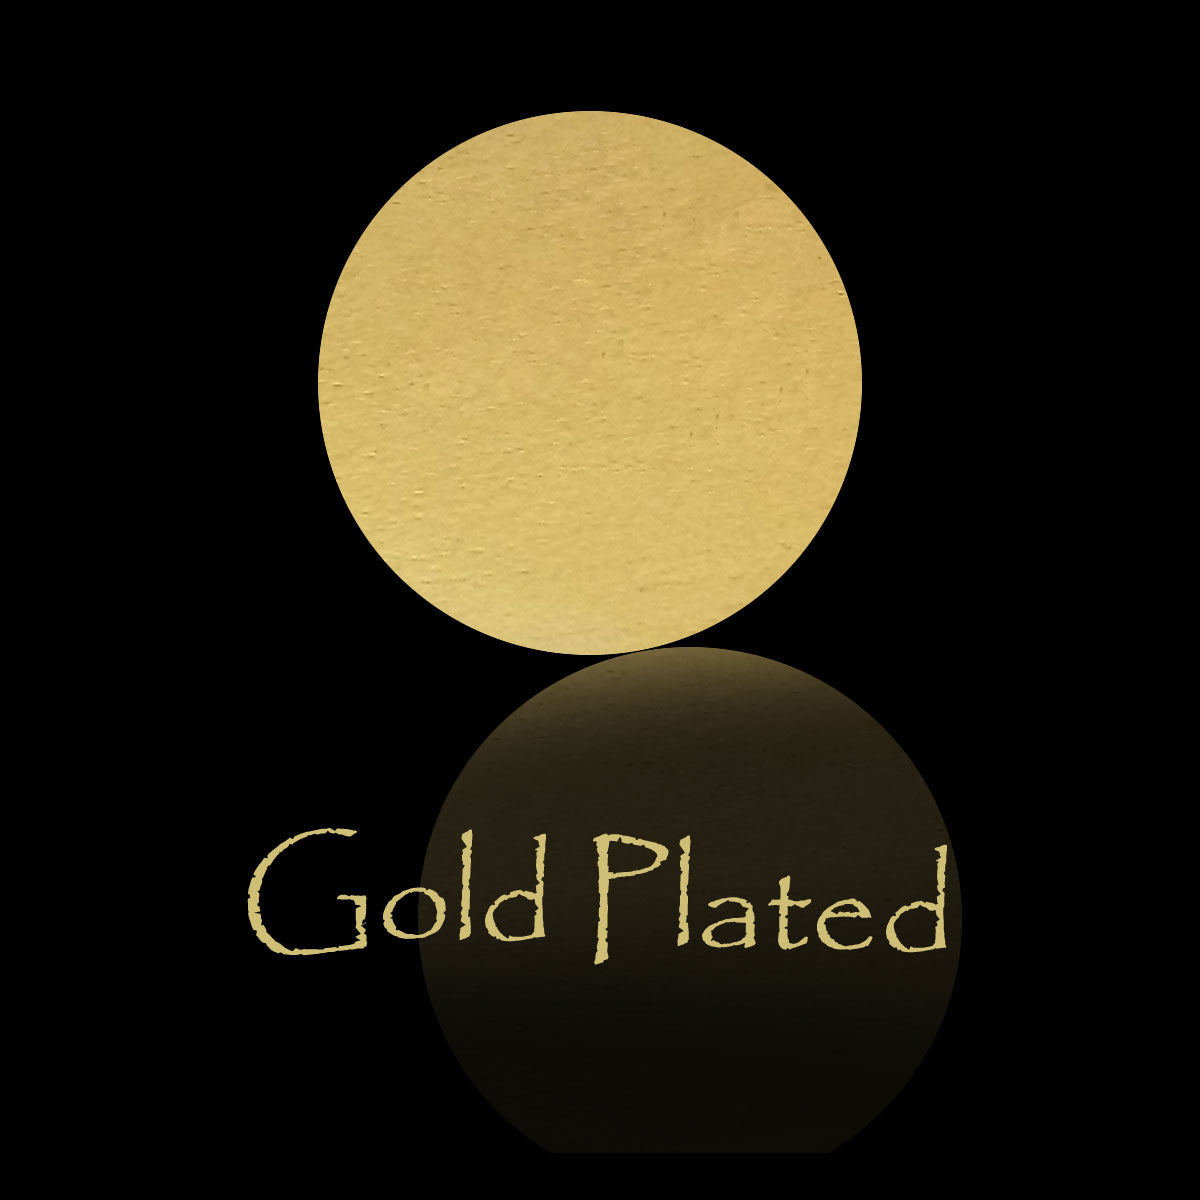 Gold Plated Unique Statement Plain Designer Handmade Ring SKU6727